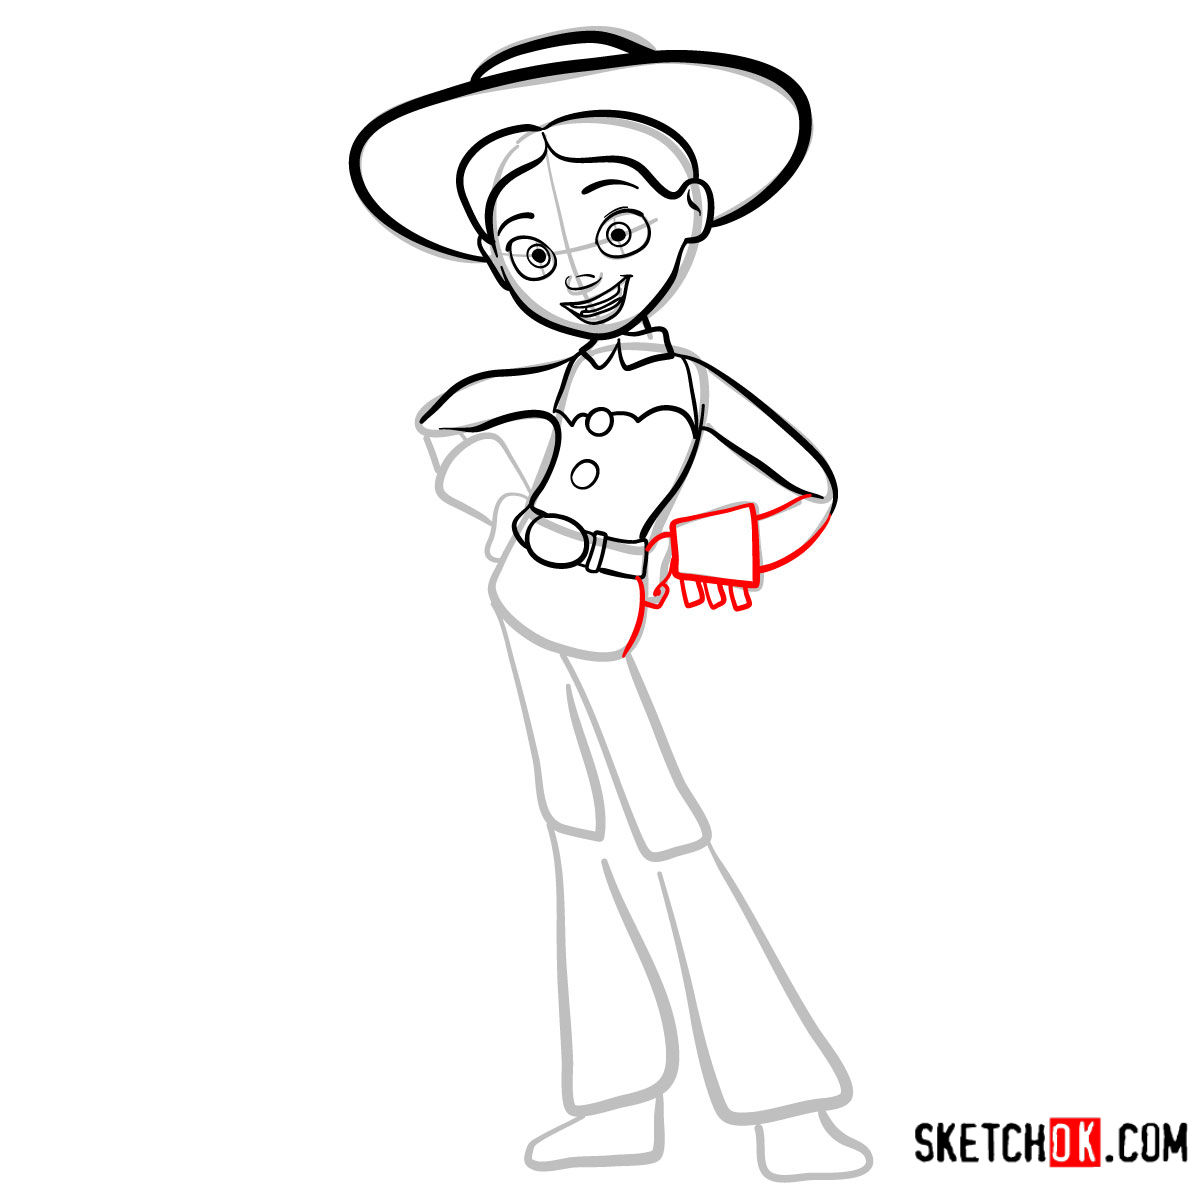 How to draw Jessie from Toy Story 2 - step 08